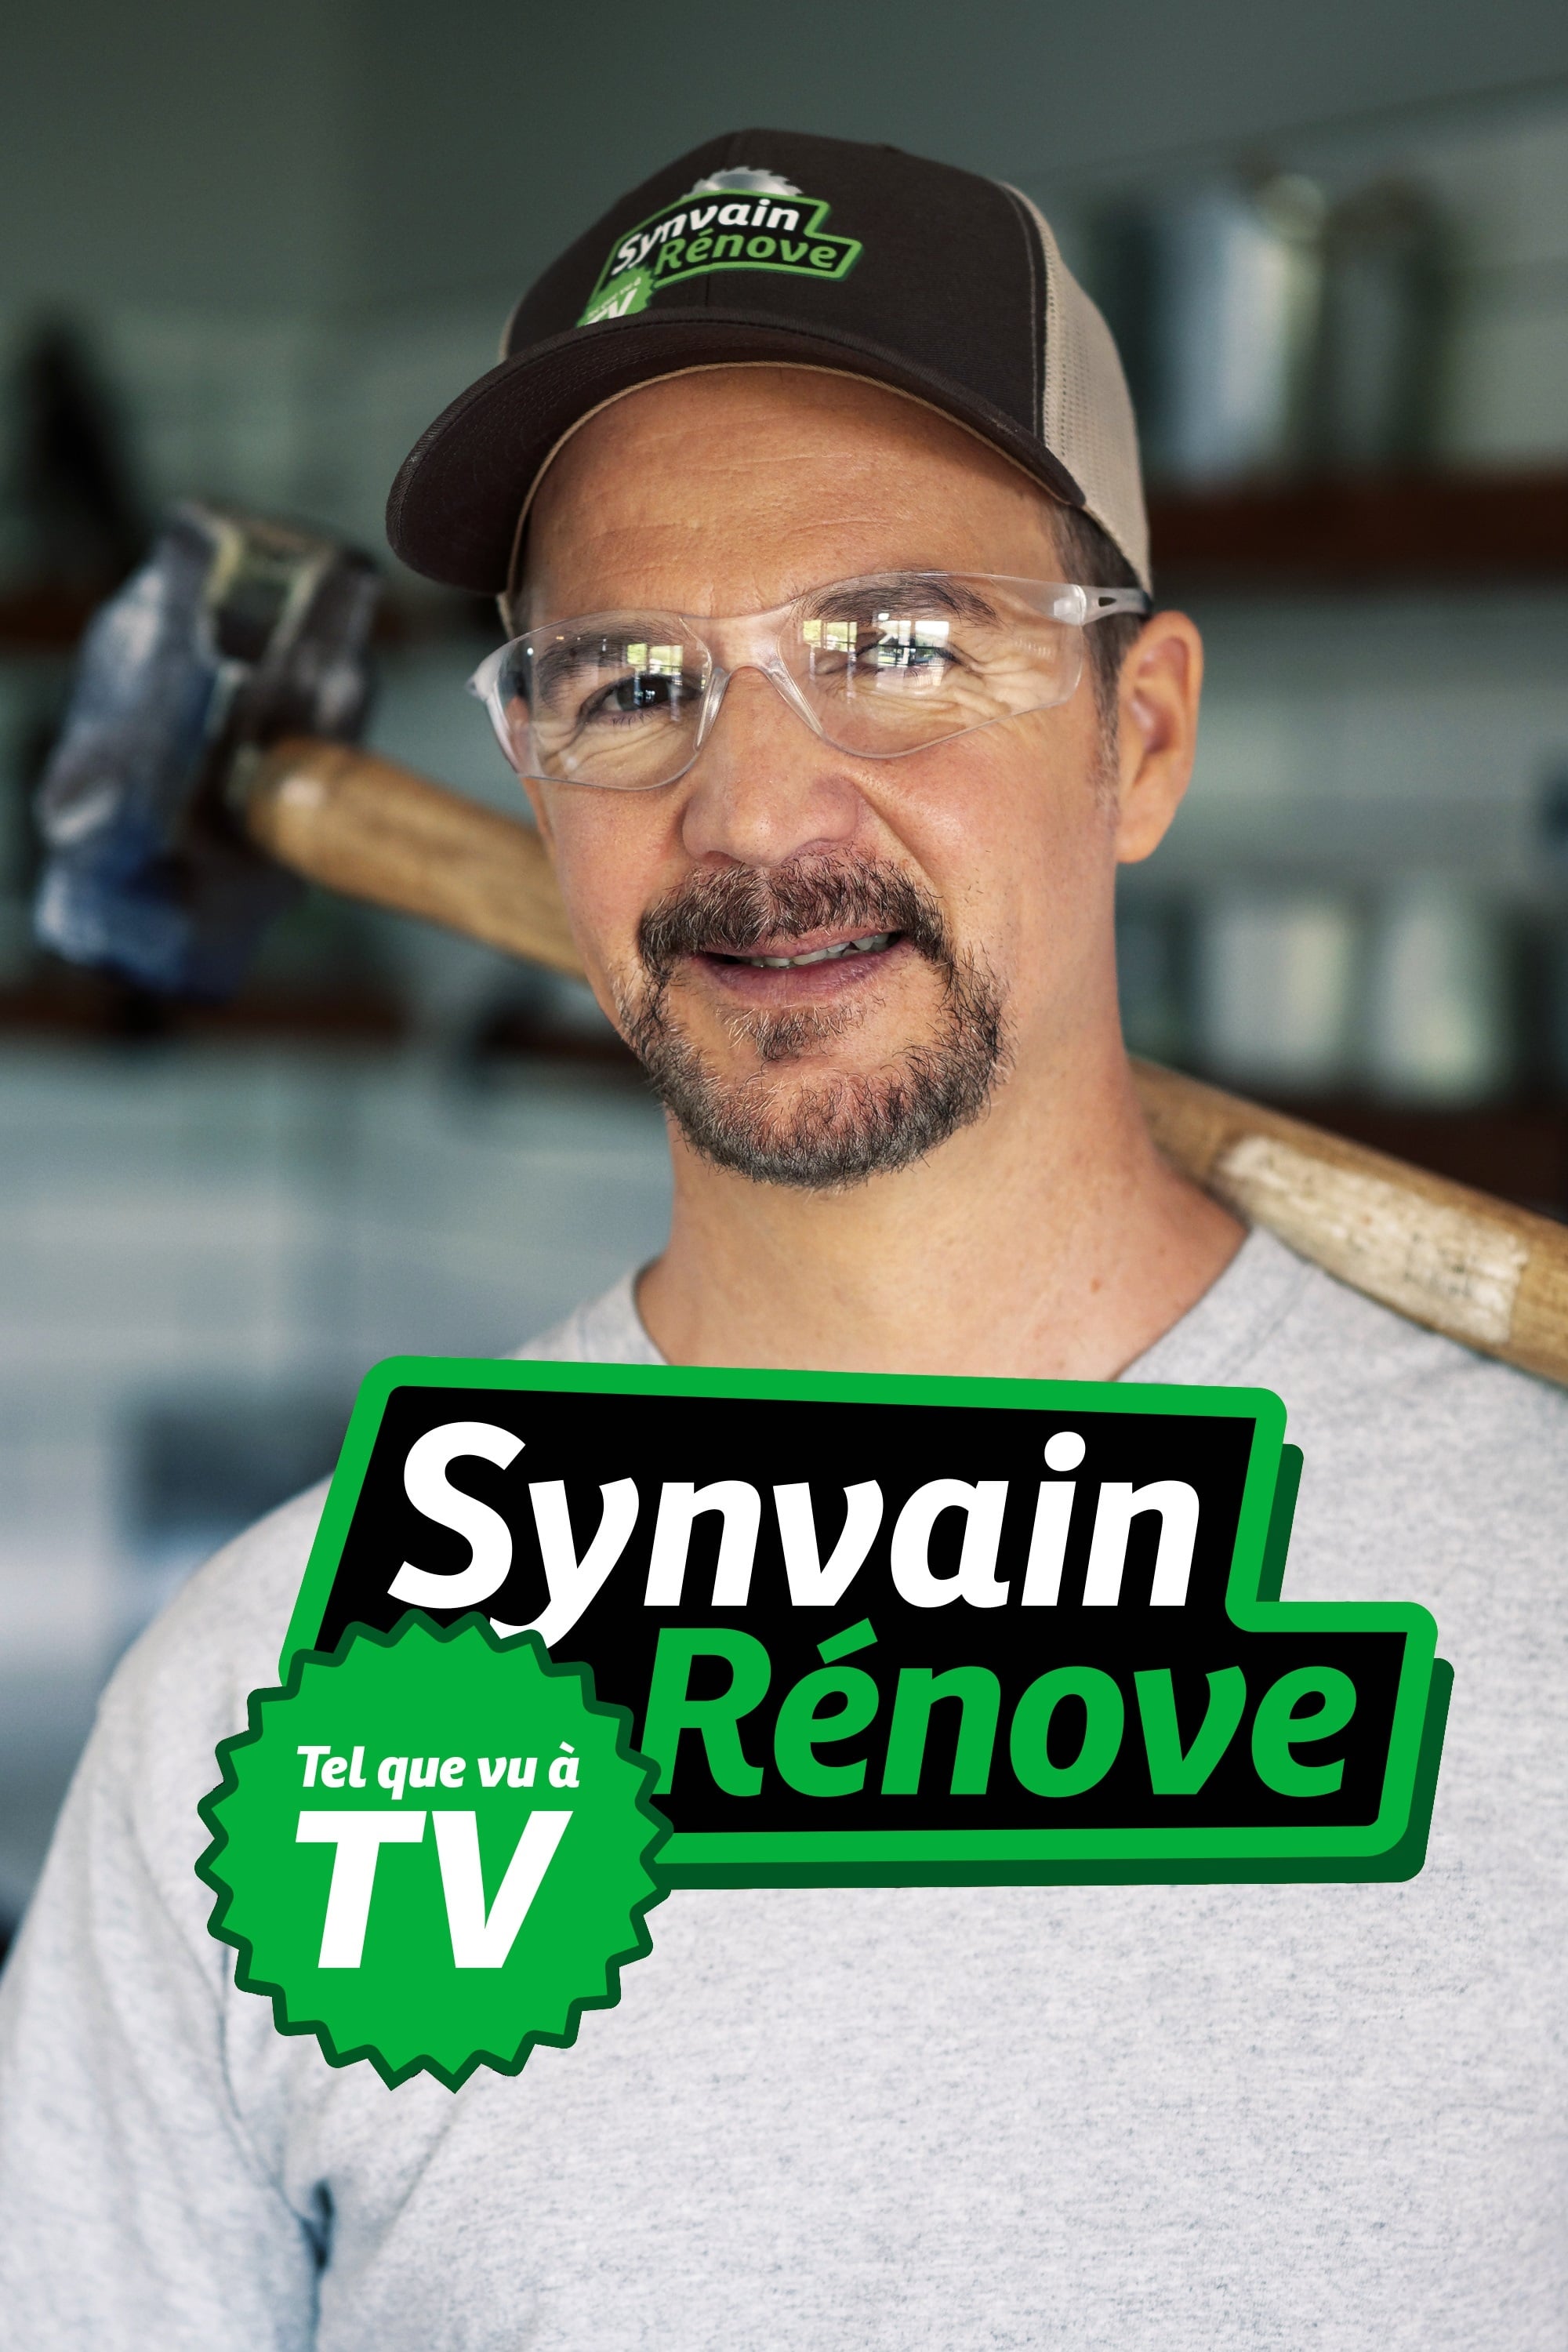 Synvain Rénove TV Shows About Ova